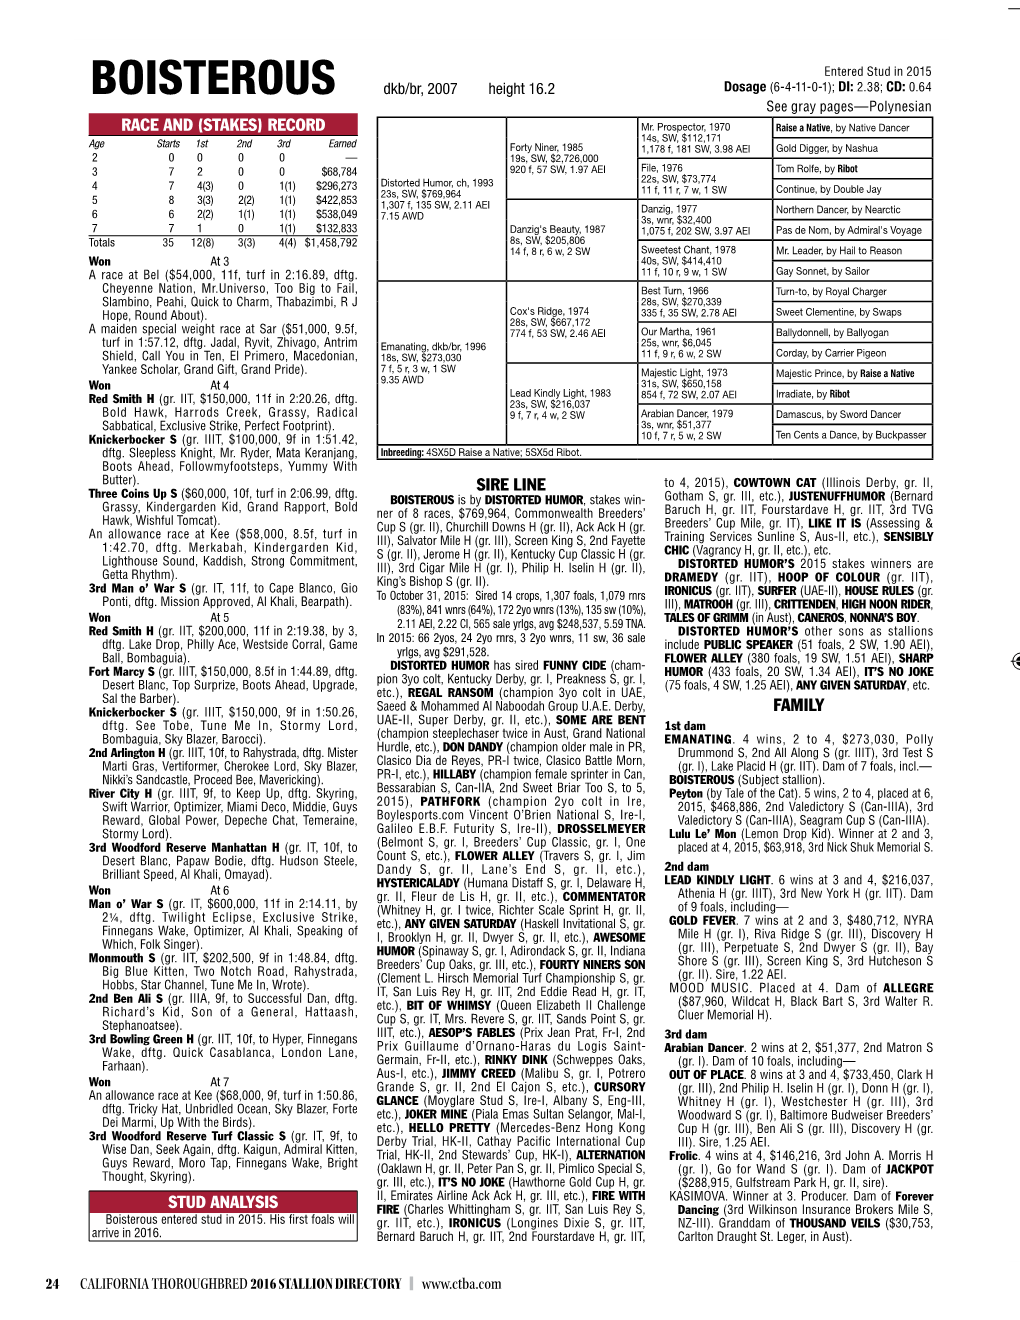 24 California Thoroughbred 2016 Stallion Directory ❙